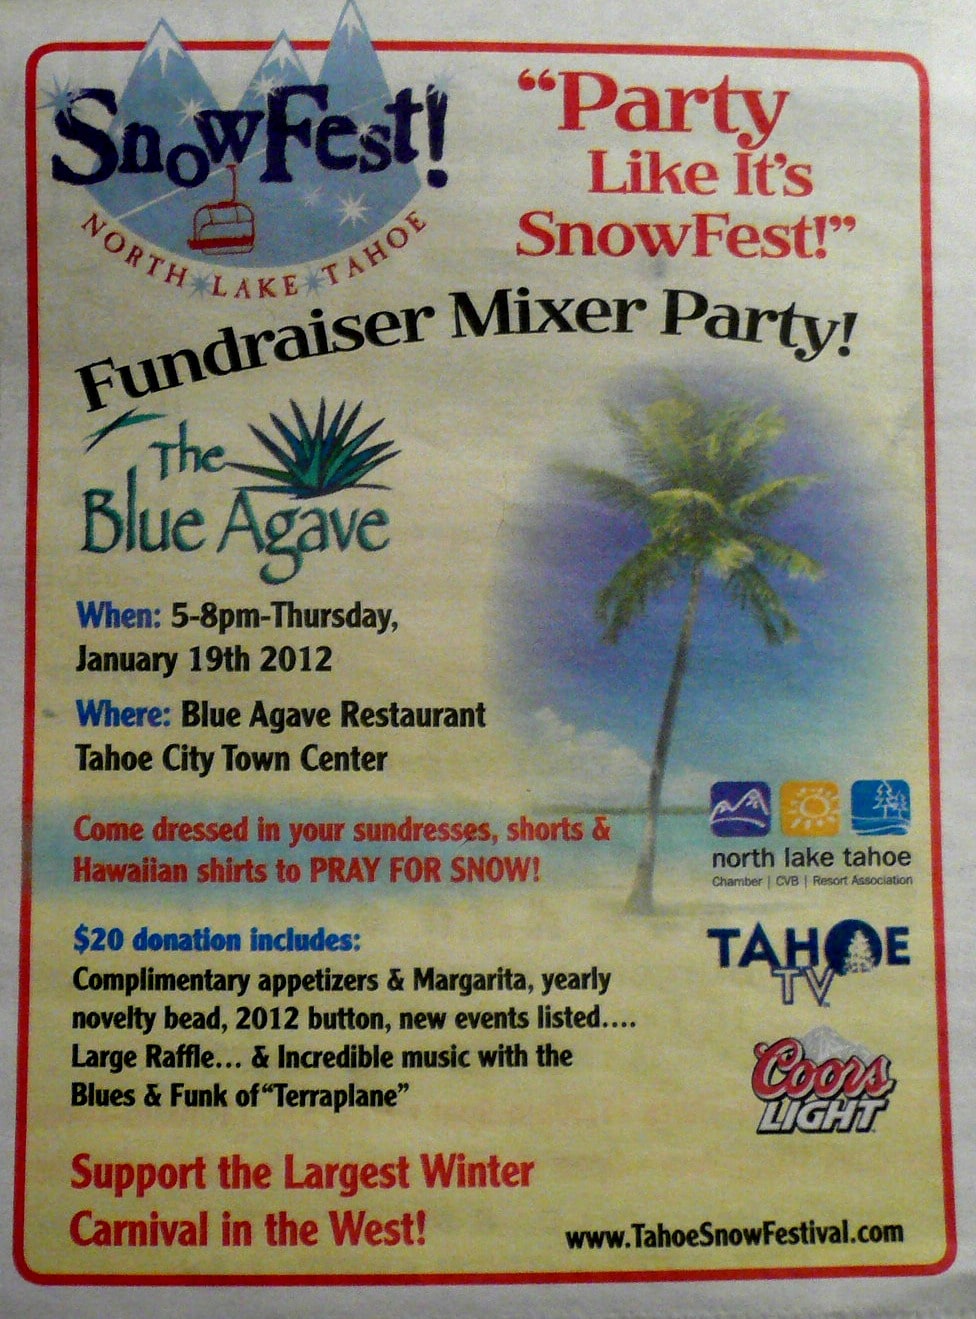 Lake Tahoe Snowfest – Fundraiser Mixer Party Thursday, January 19, 2012